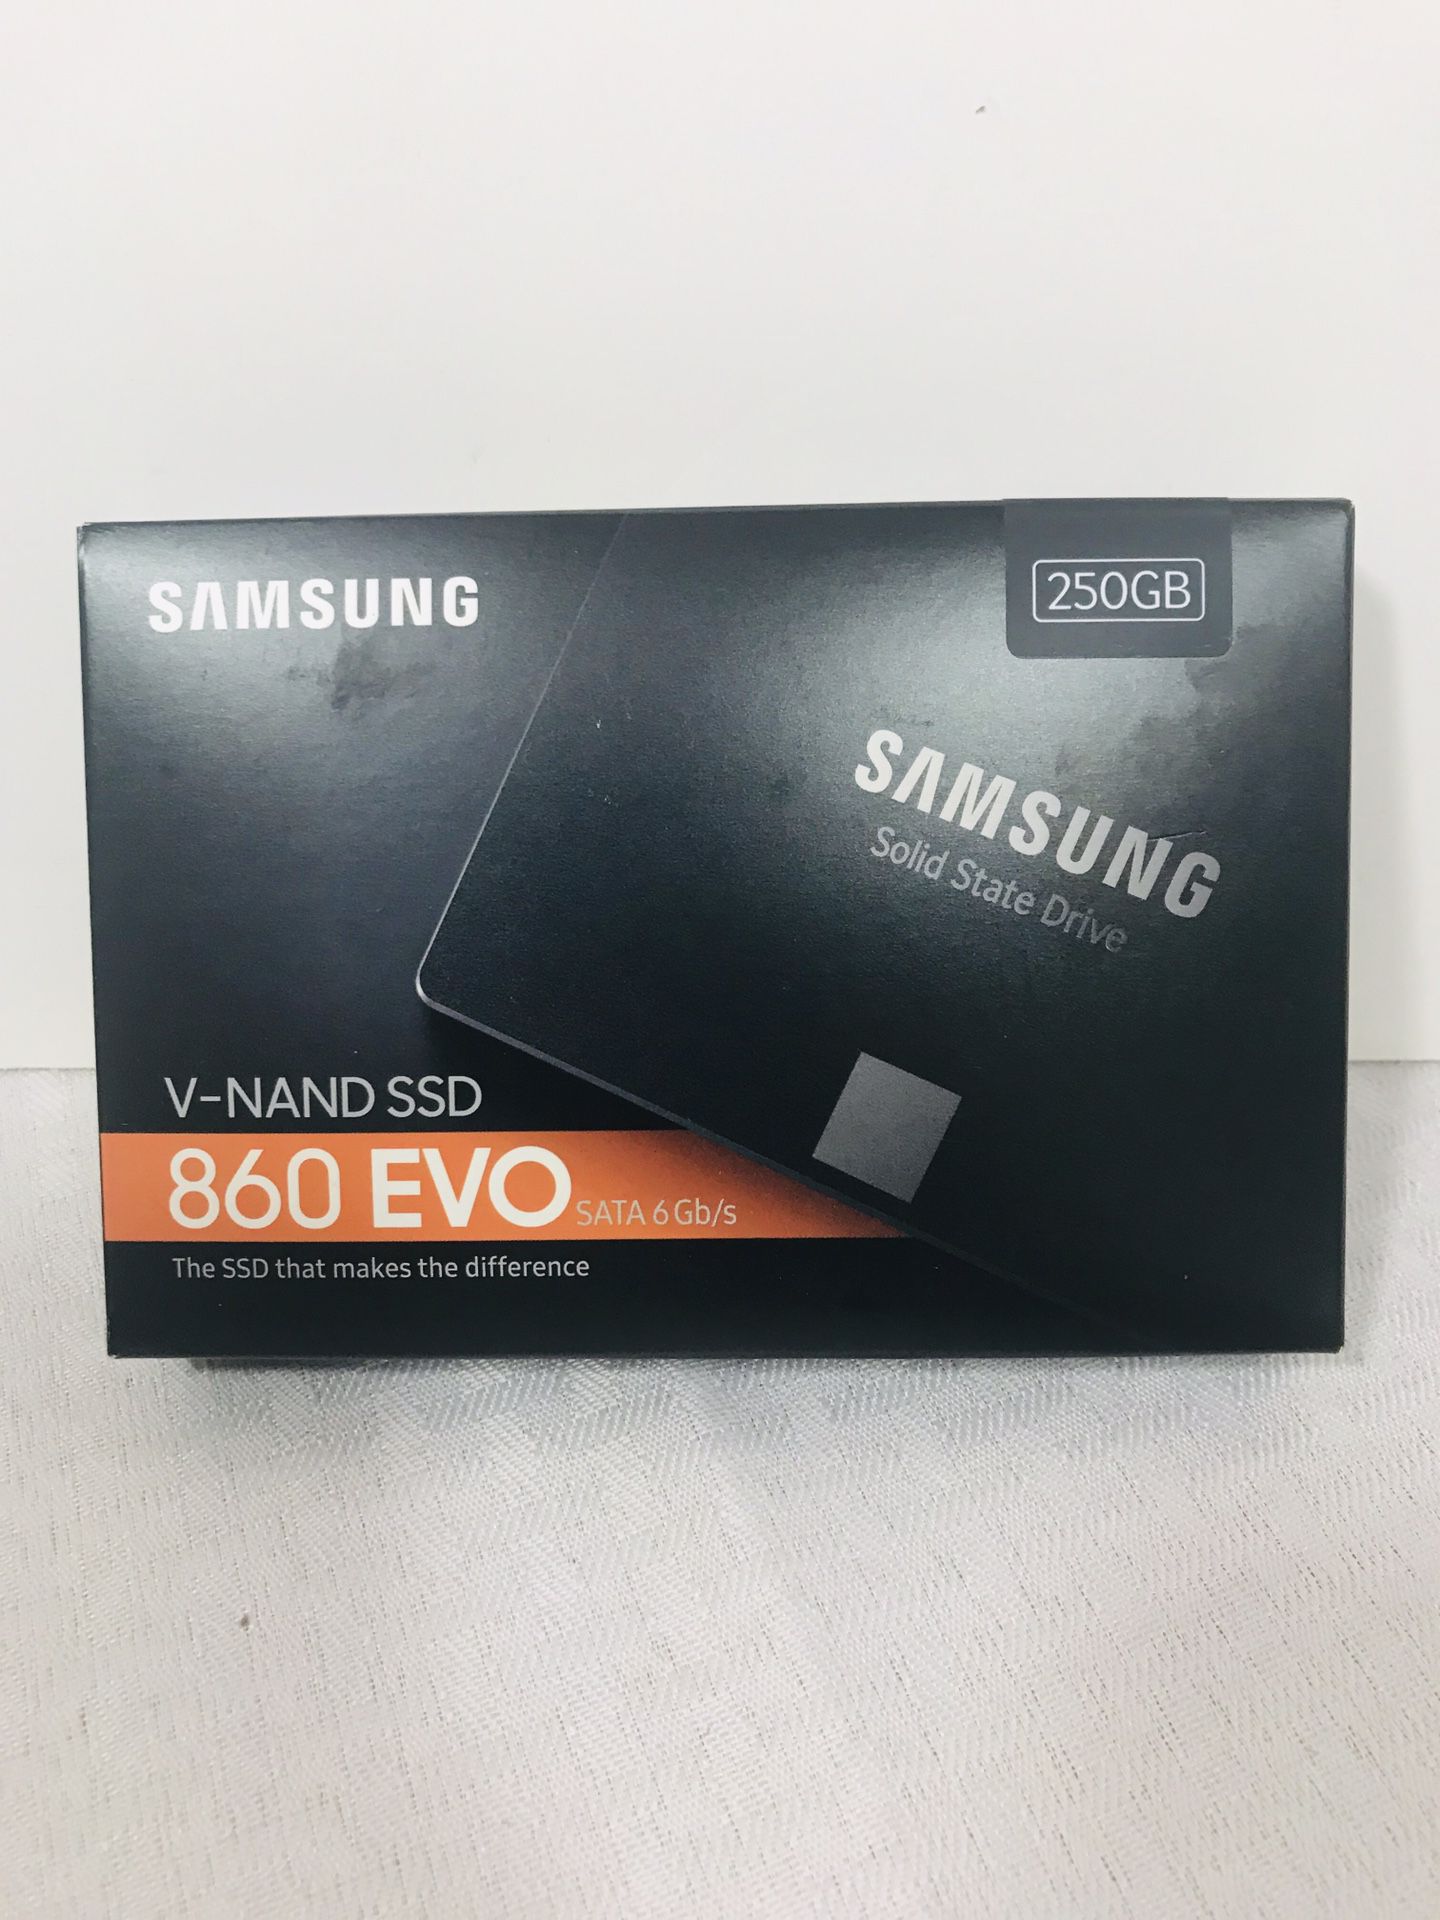 Brand new Samsung 860 EVO 250GB SATA III Internal SSD